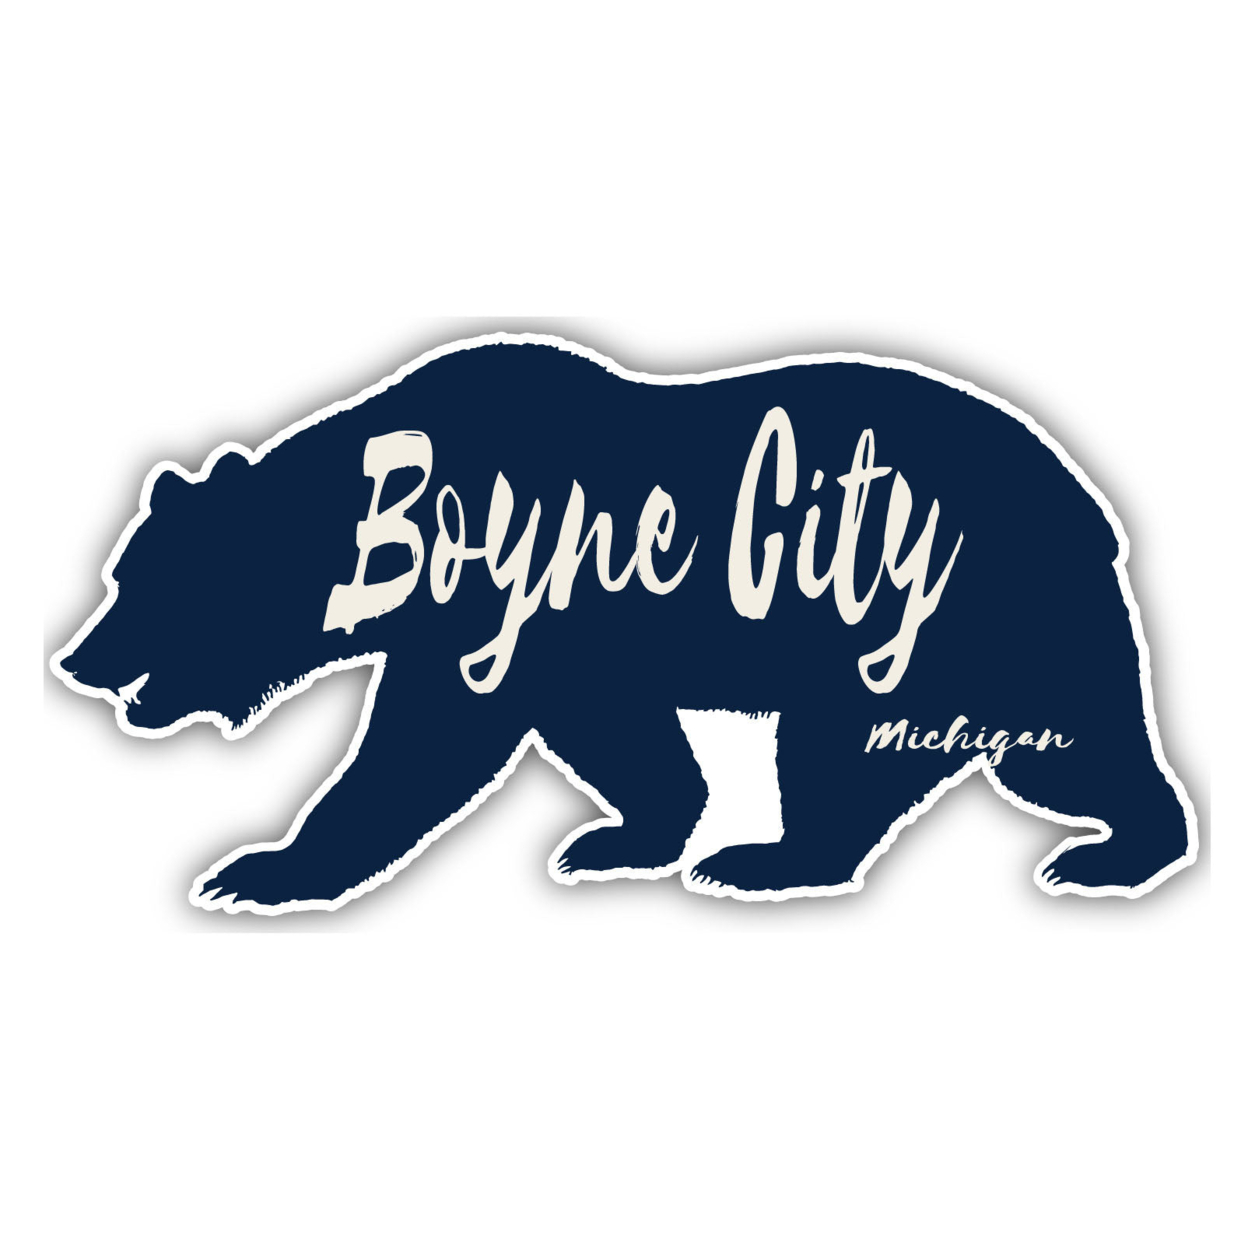 Boyne City Michigan Souvenir Decorative Stickers (Choose Theme And Size) - 4-Pack, 12-Inch, Bear